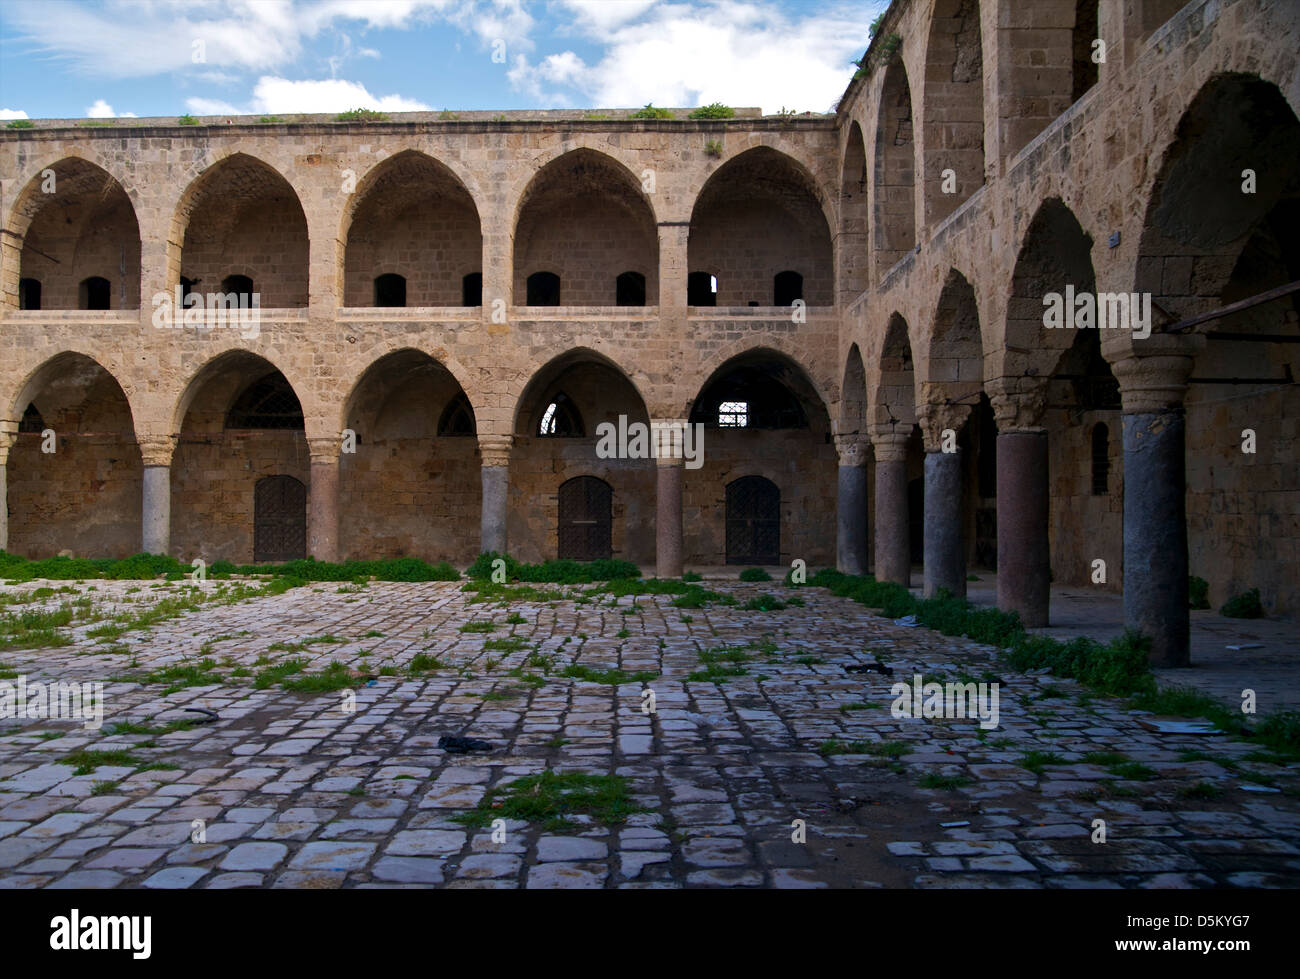 Khan al-Umdan, Inn of the Columns ,Old city of Acre, Akko - Israel Stock Photo